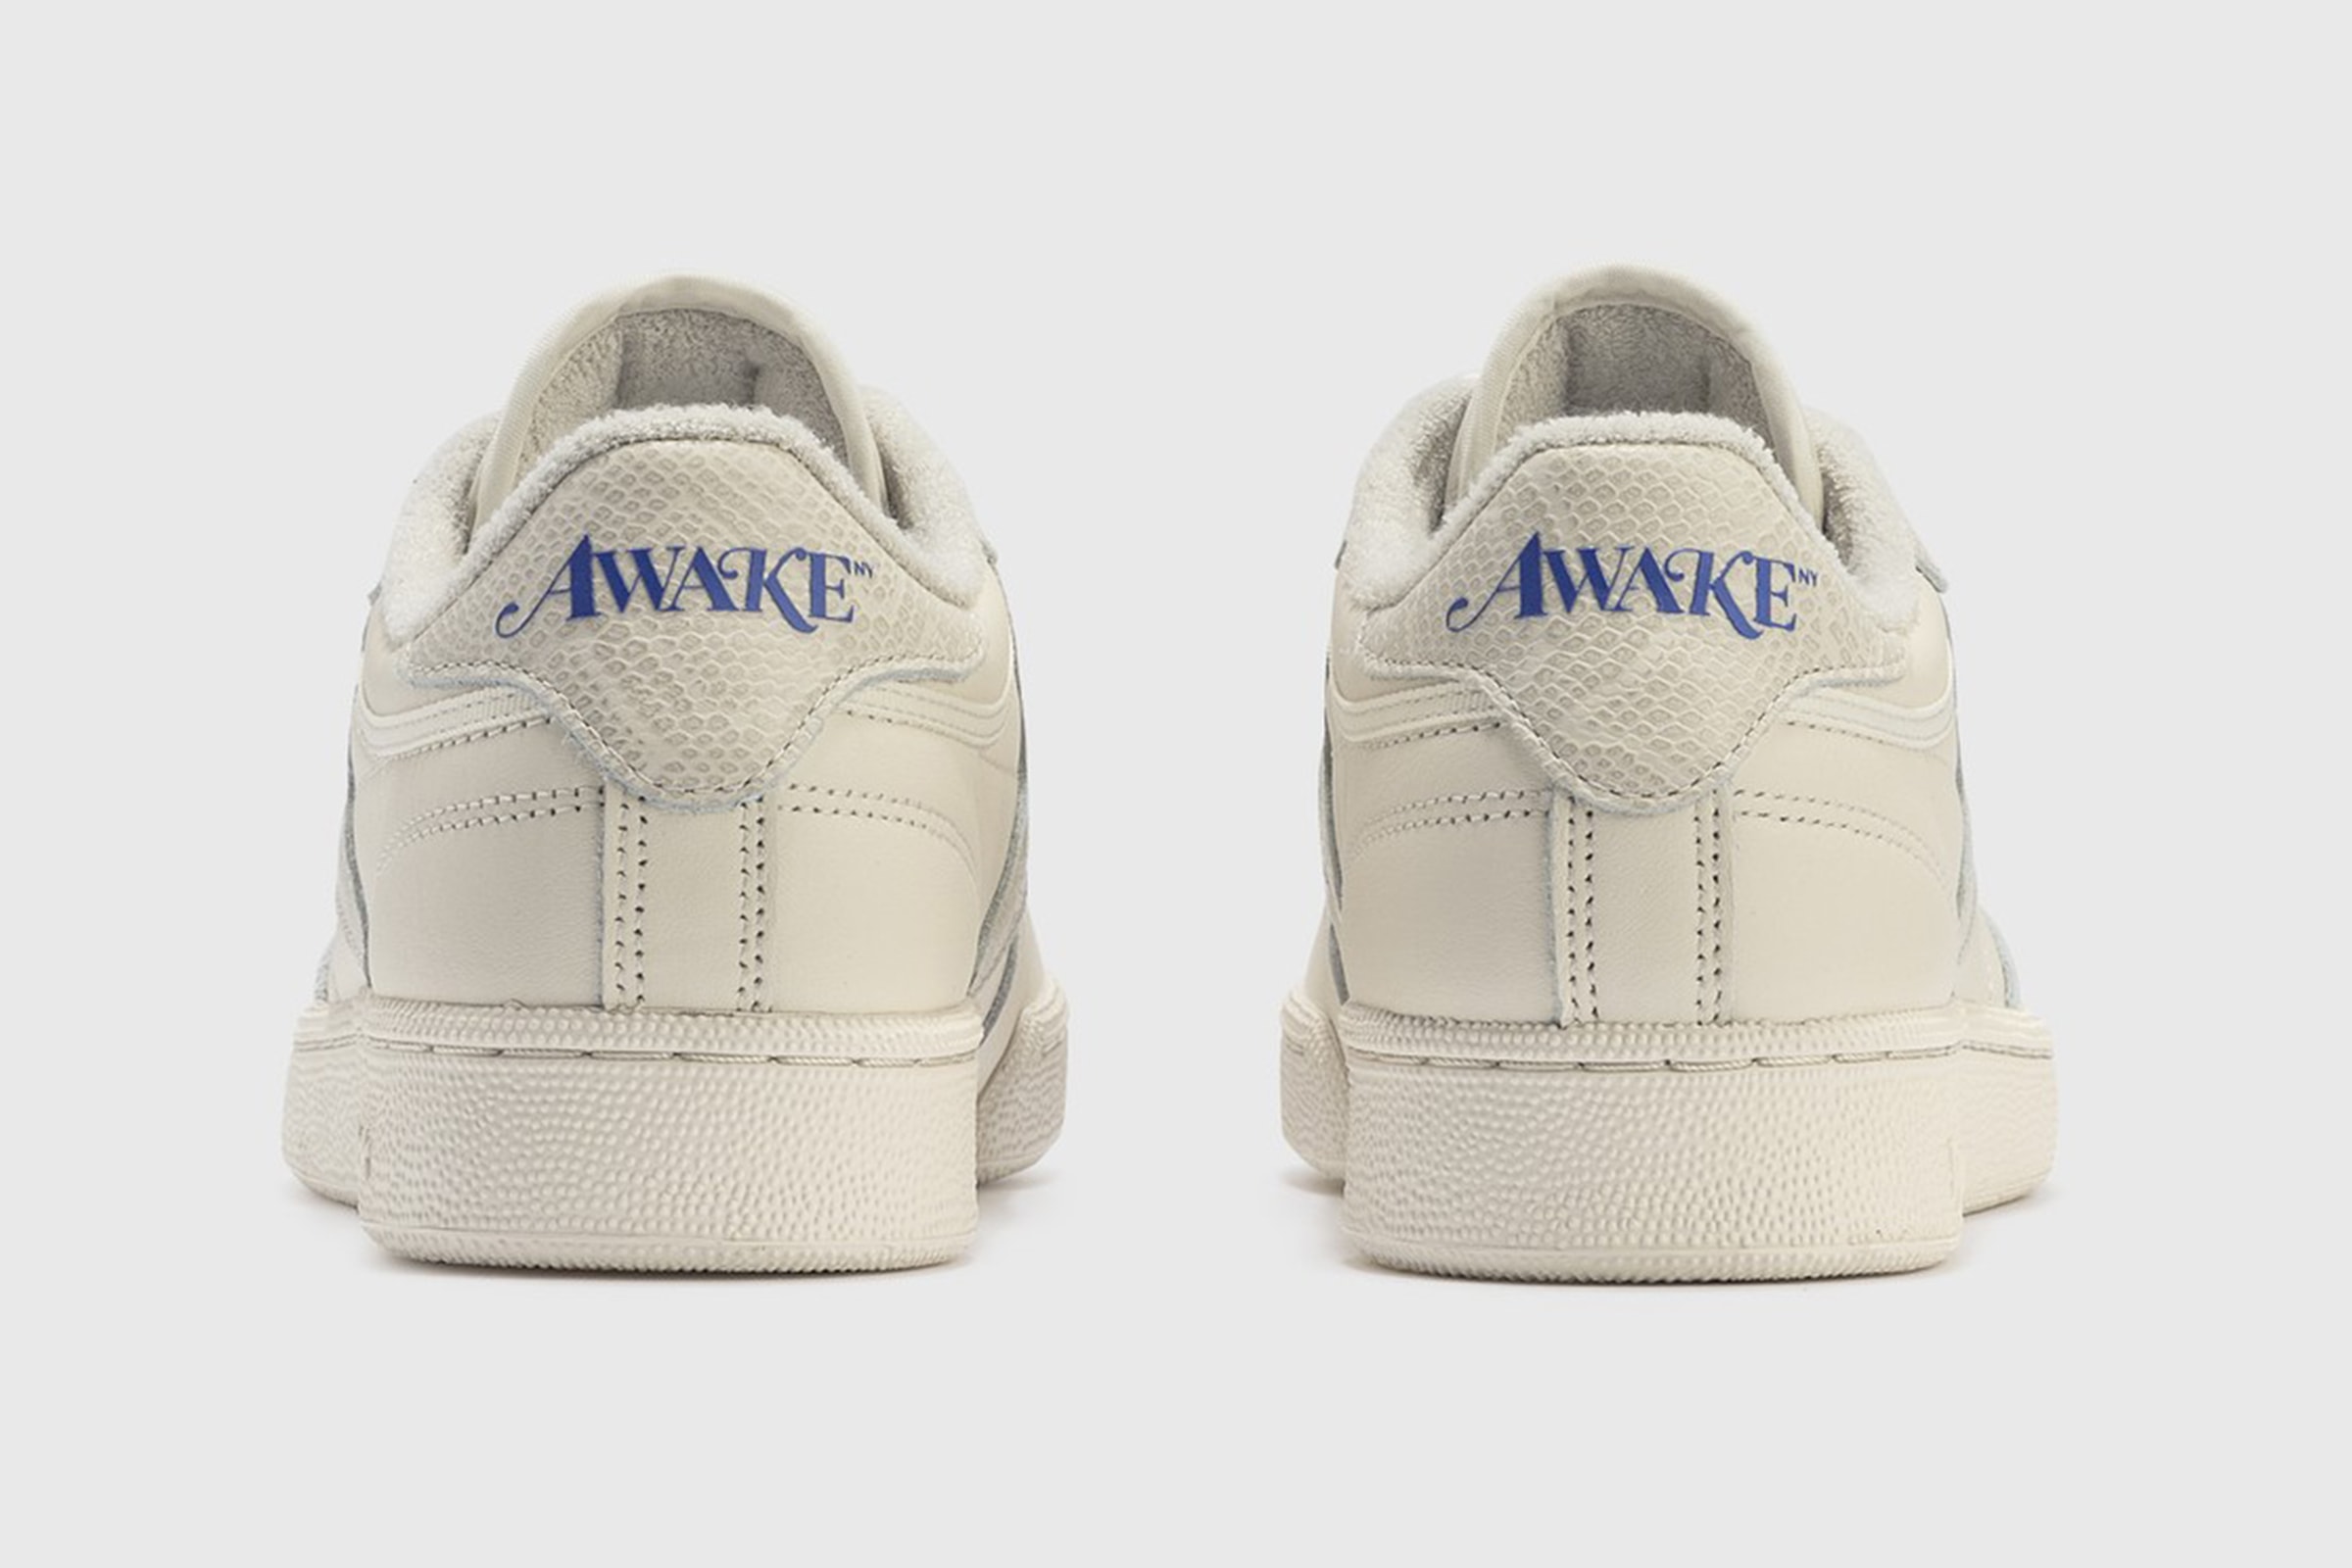 Awake NY x Reebok 全新聯乘鞋款系列正式上架